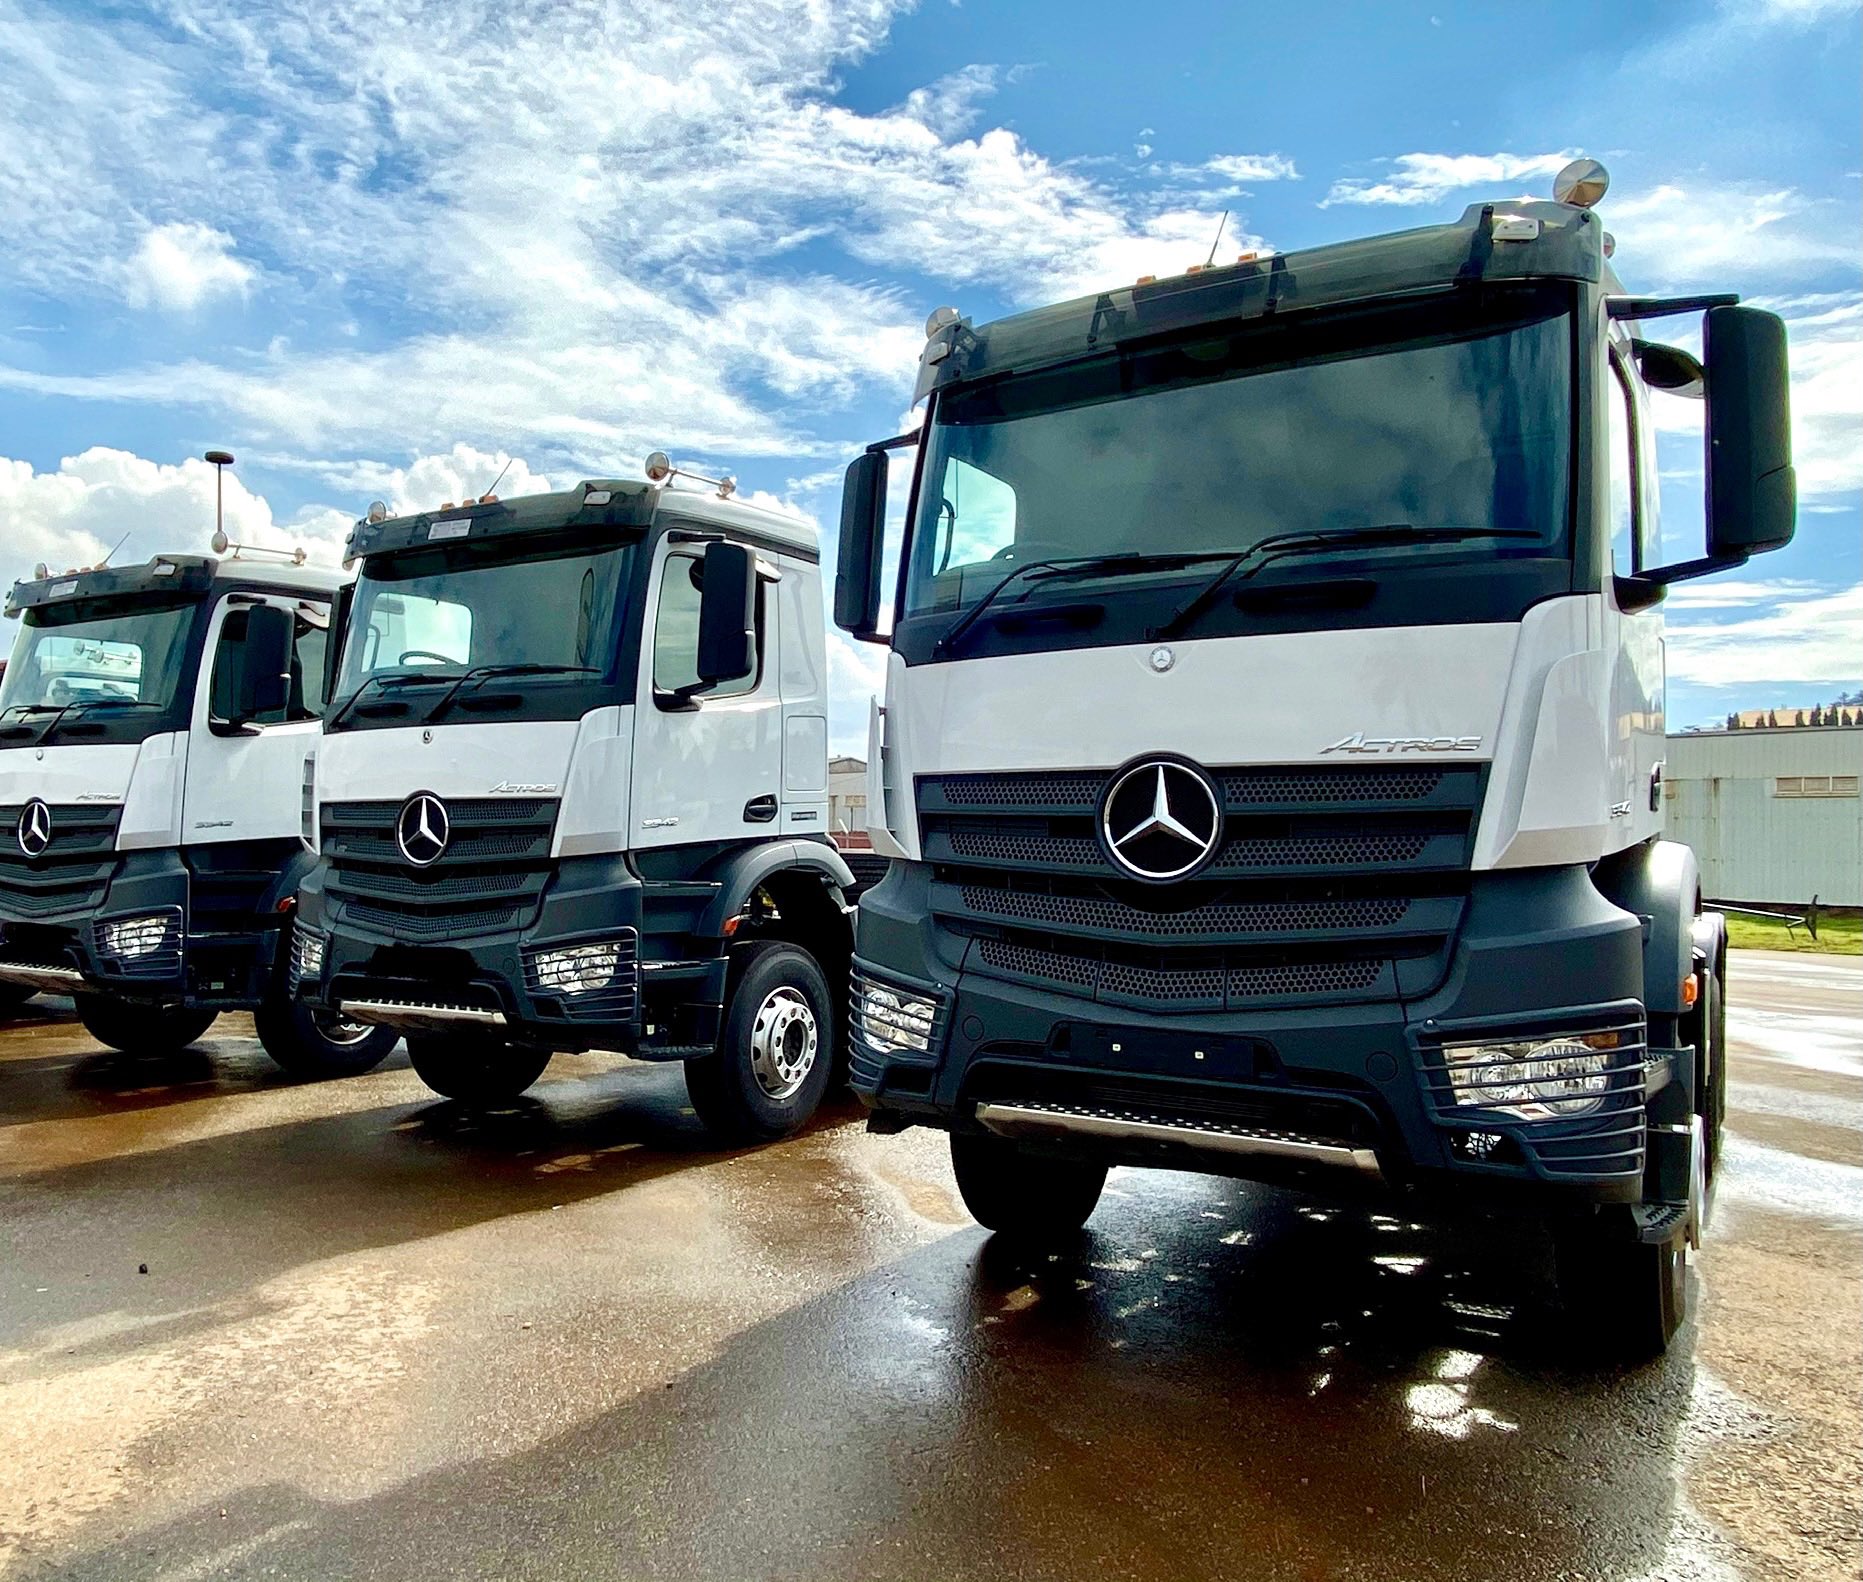 Actros - Mercedes-Benz Trucks - Trucks you can trust